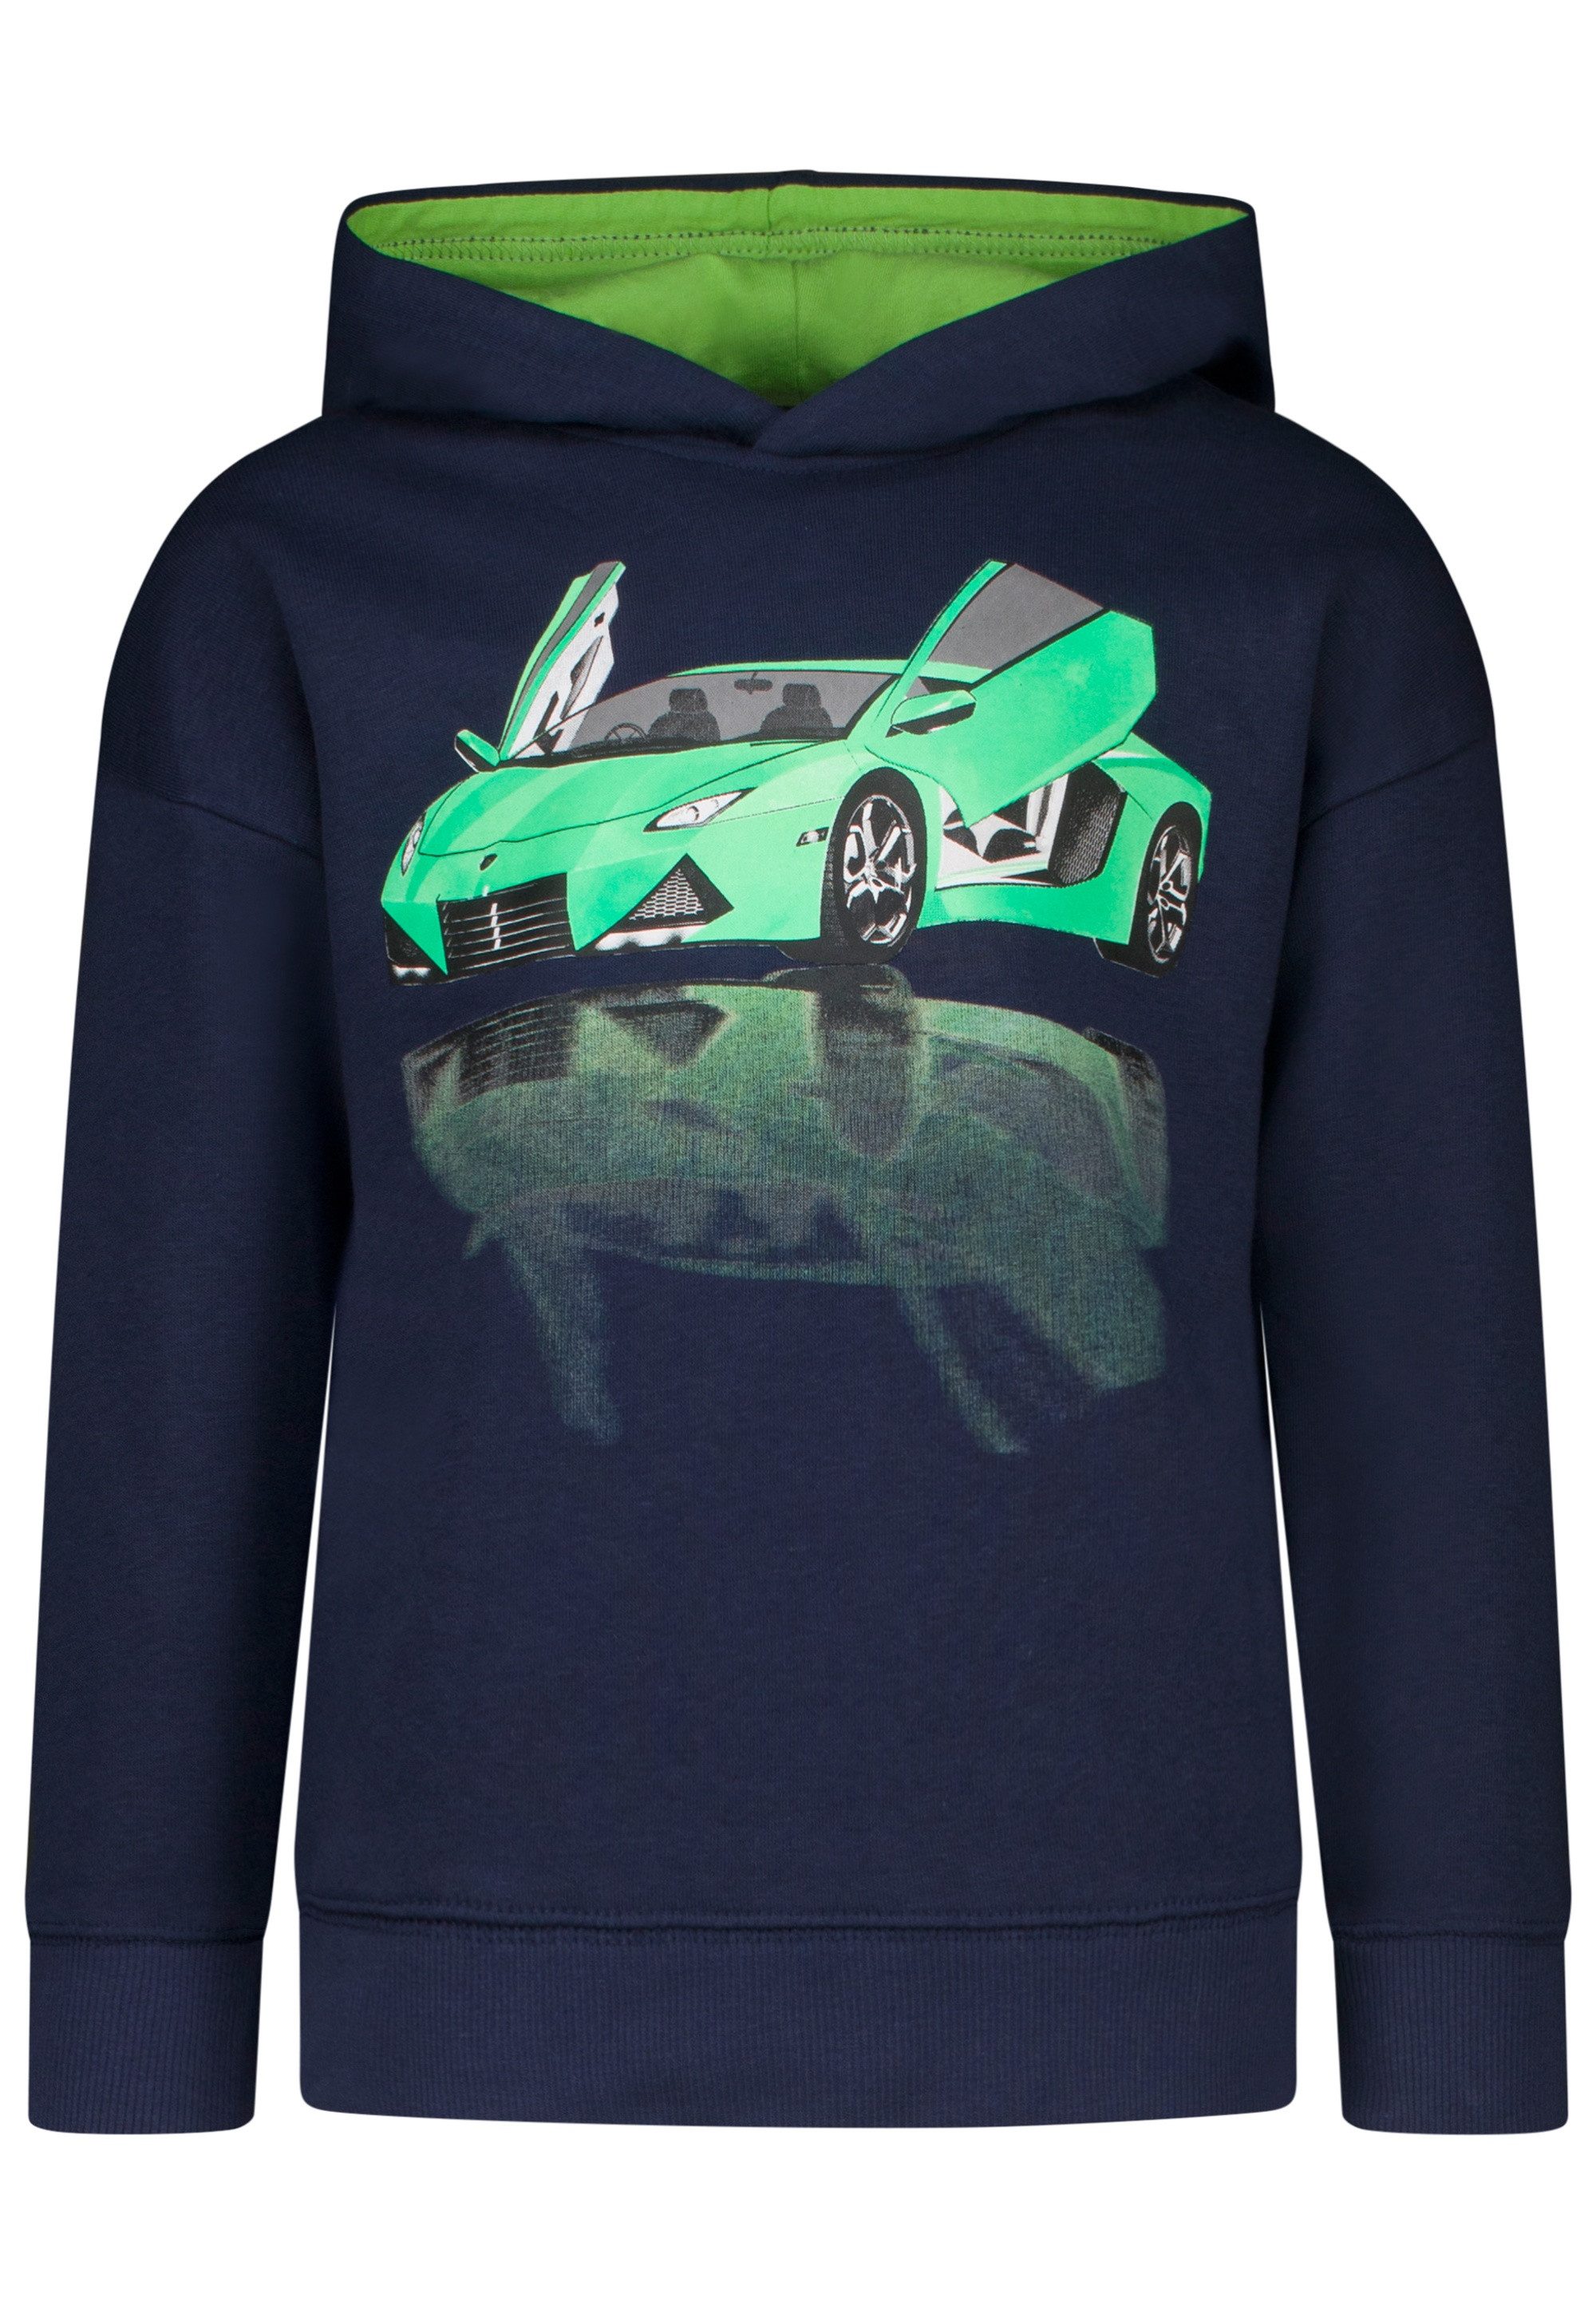 SALT AND PEPPER Kapuzensweatshirt Green Car mit großem Rennwagen-Motiv